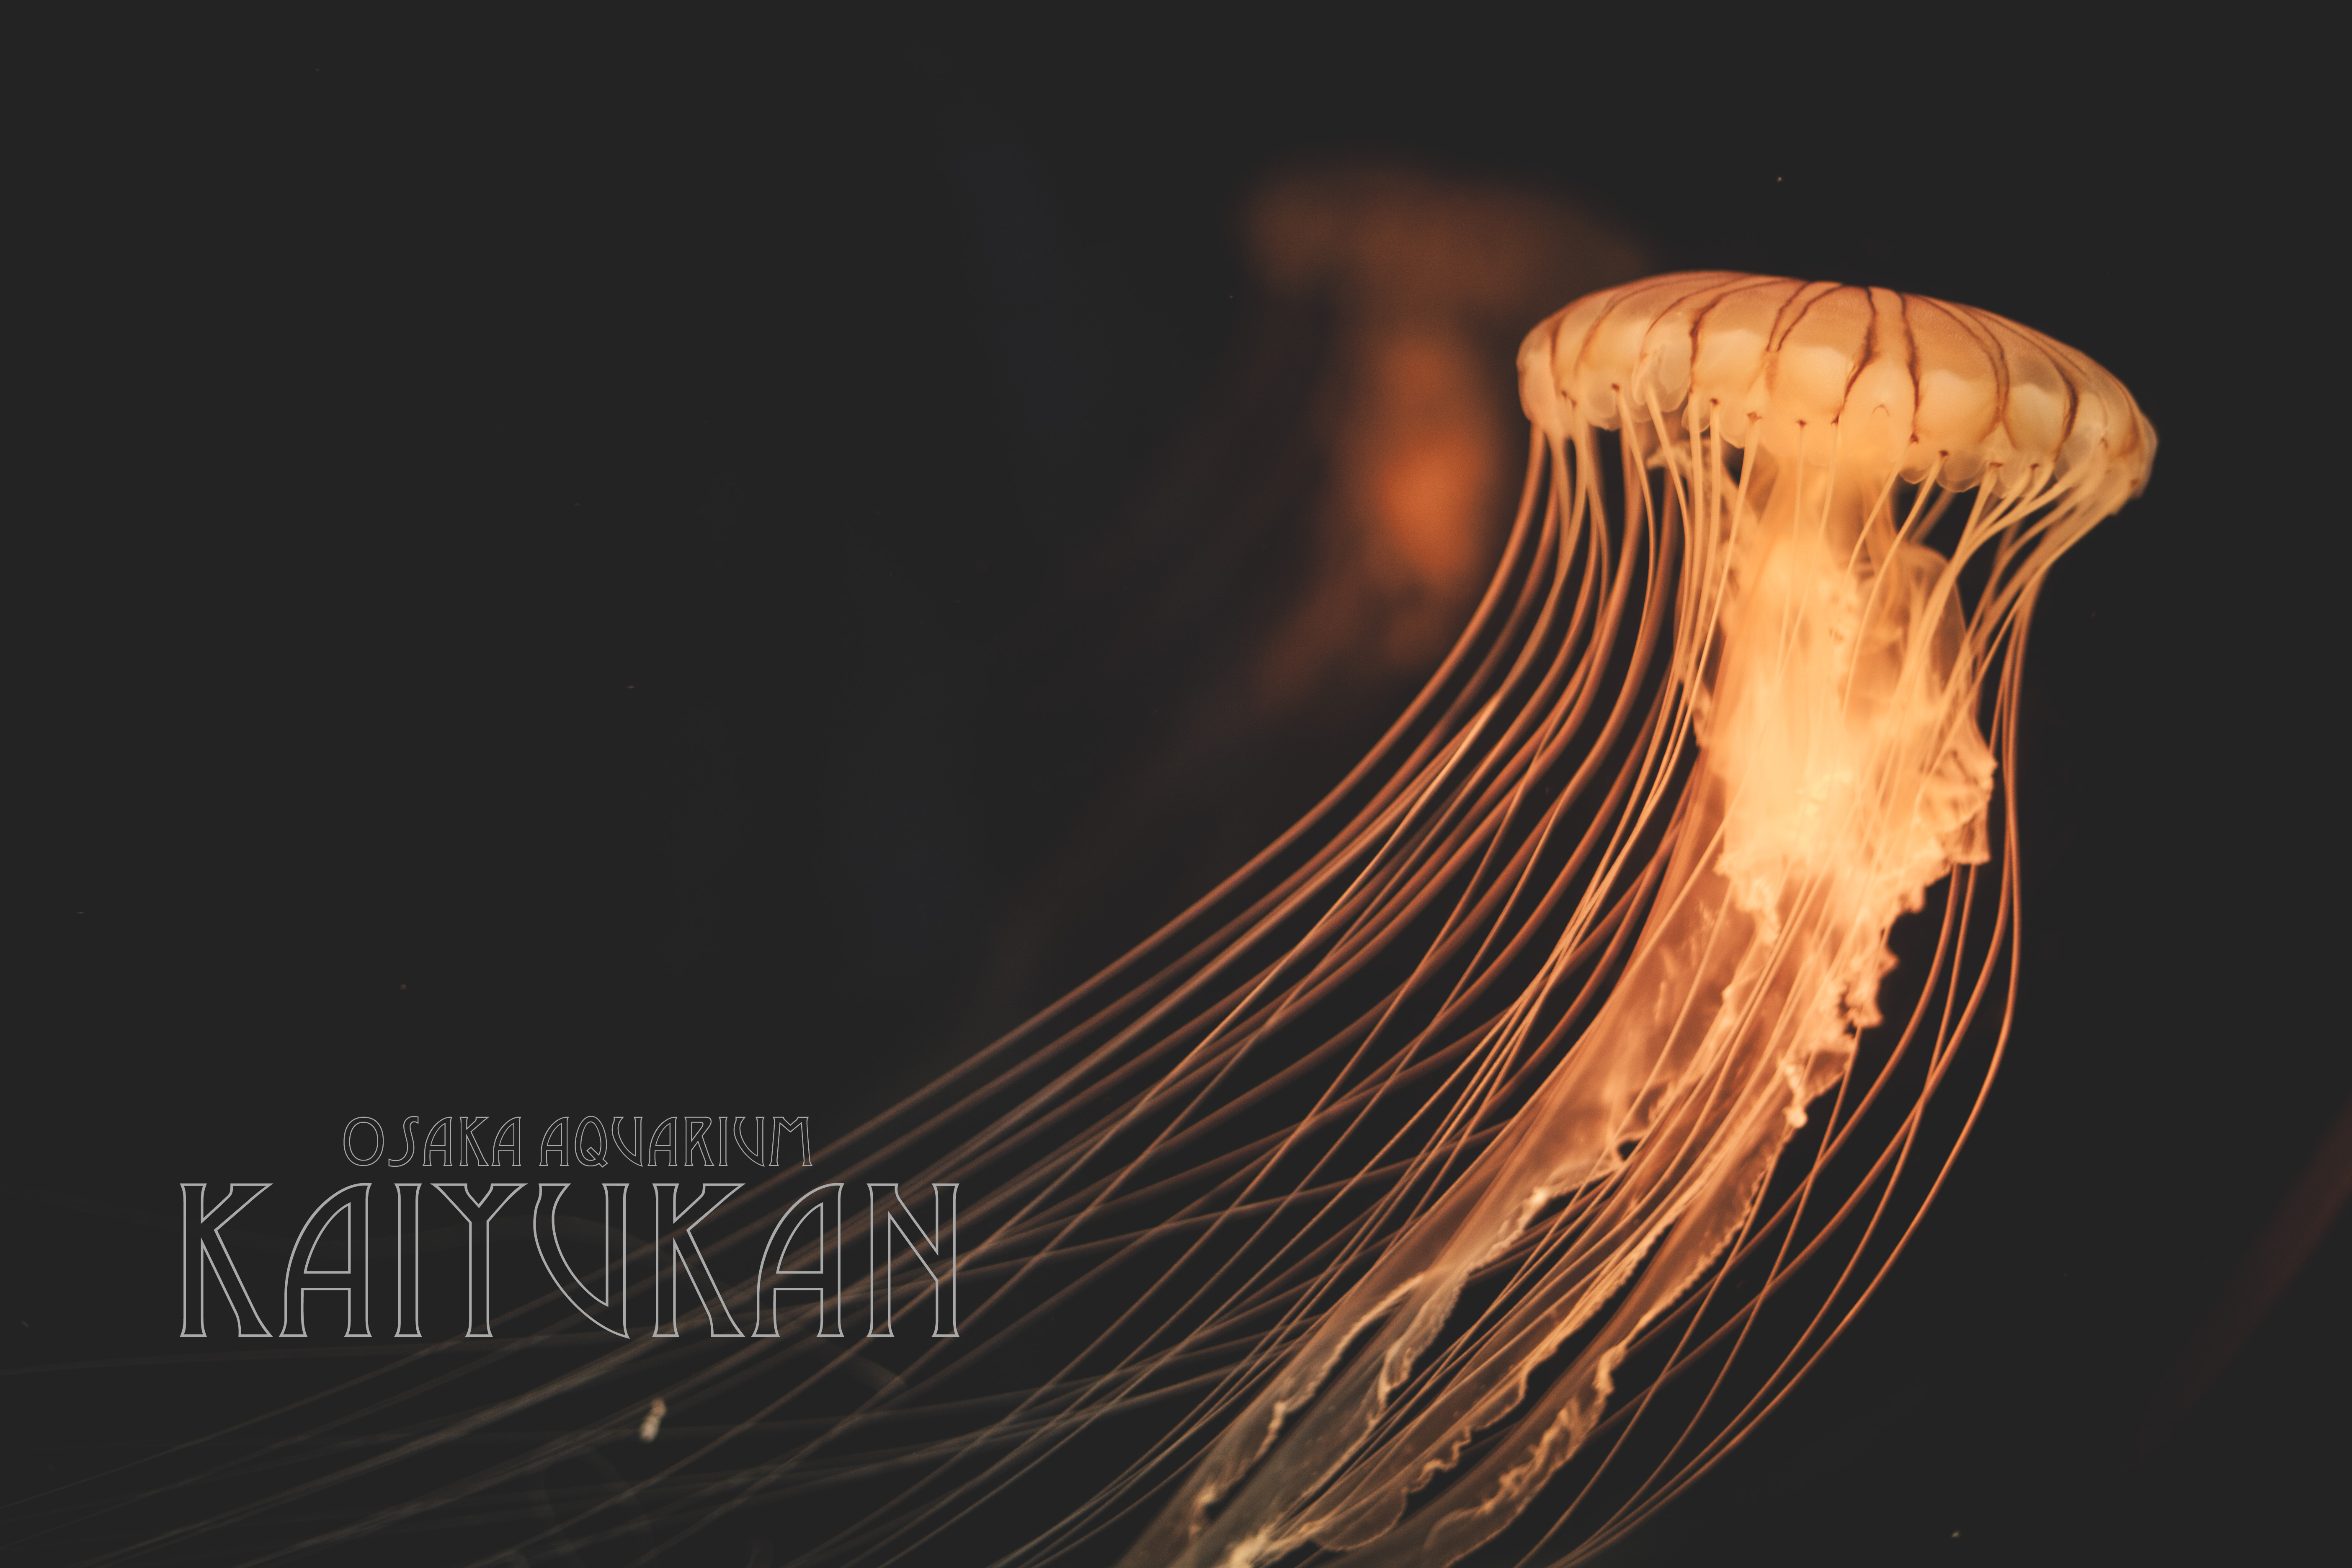 Osaka aquarium kaiyukan jellyfish exhibit